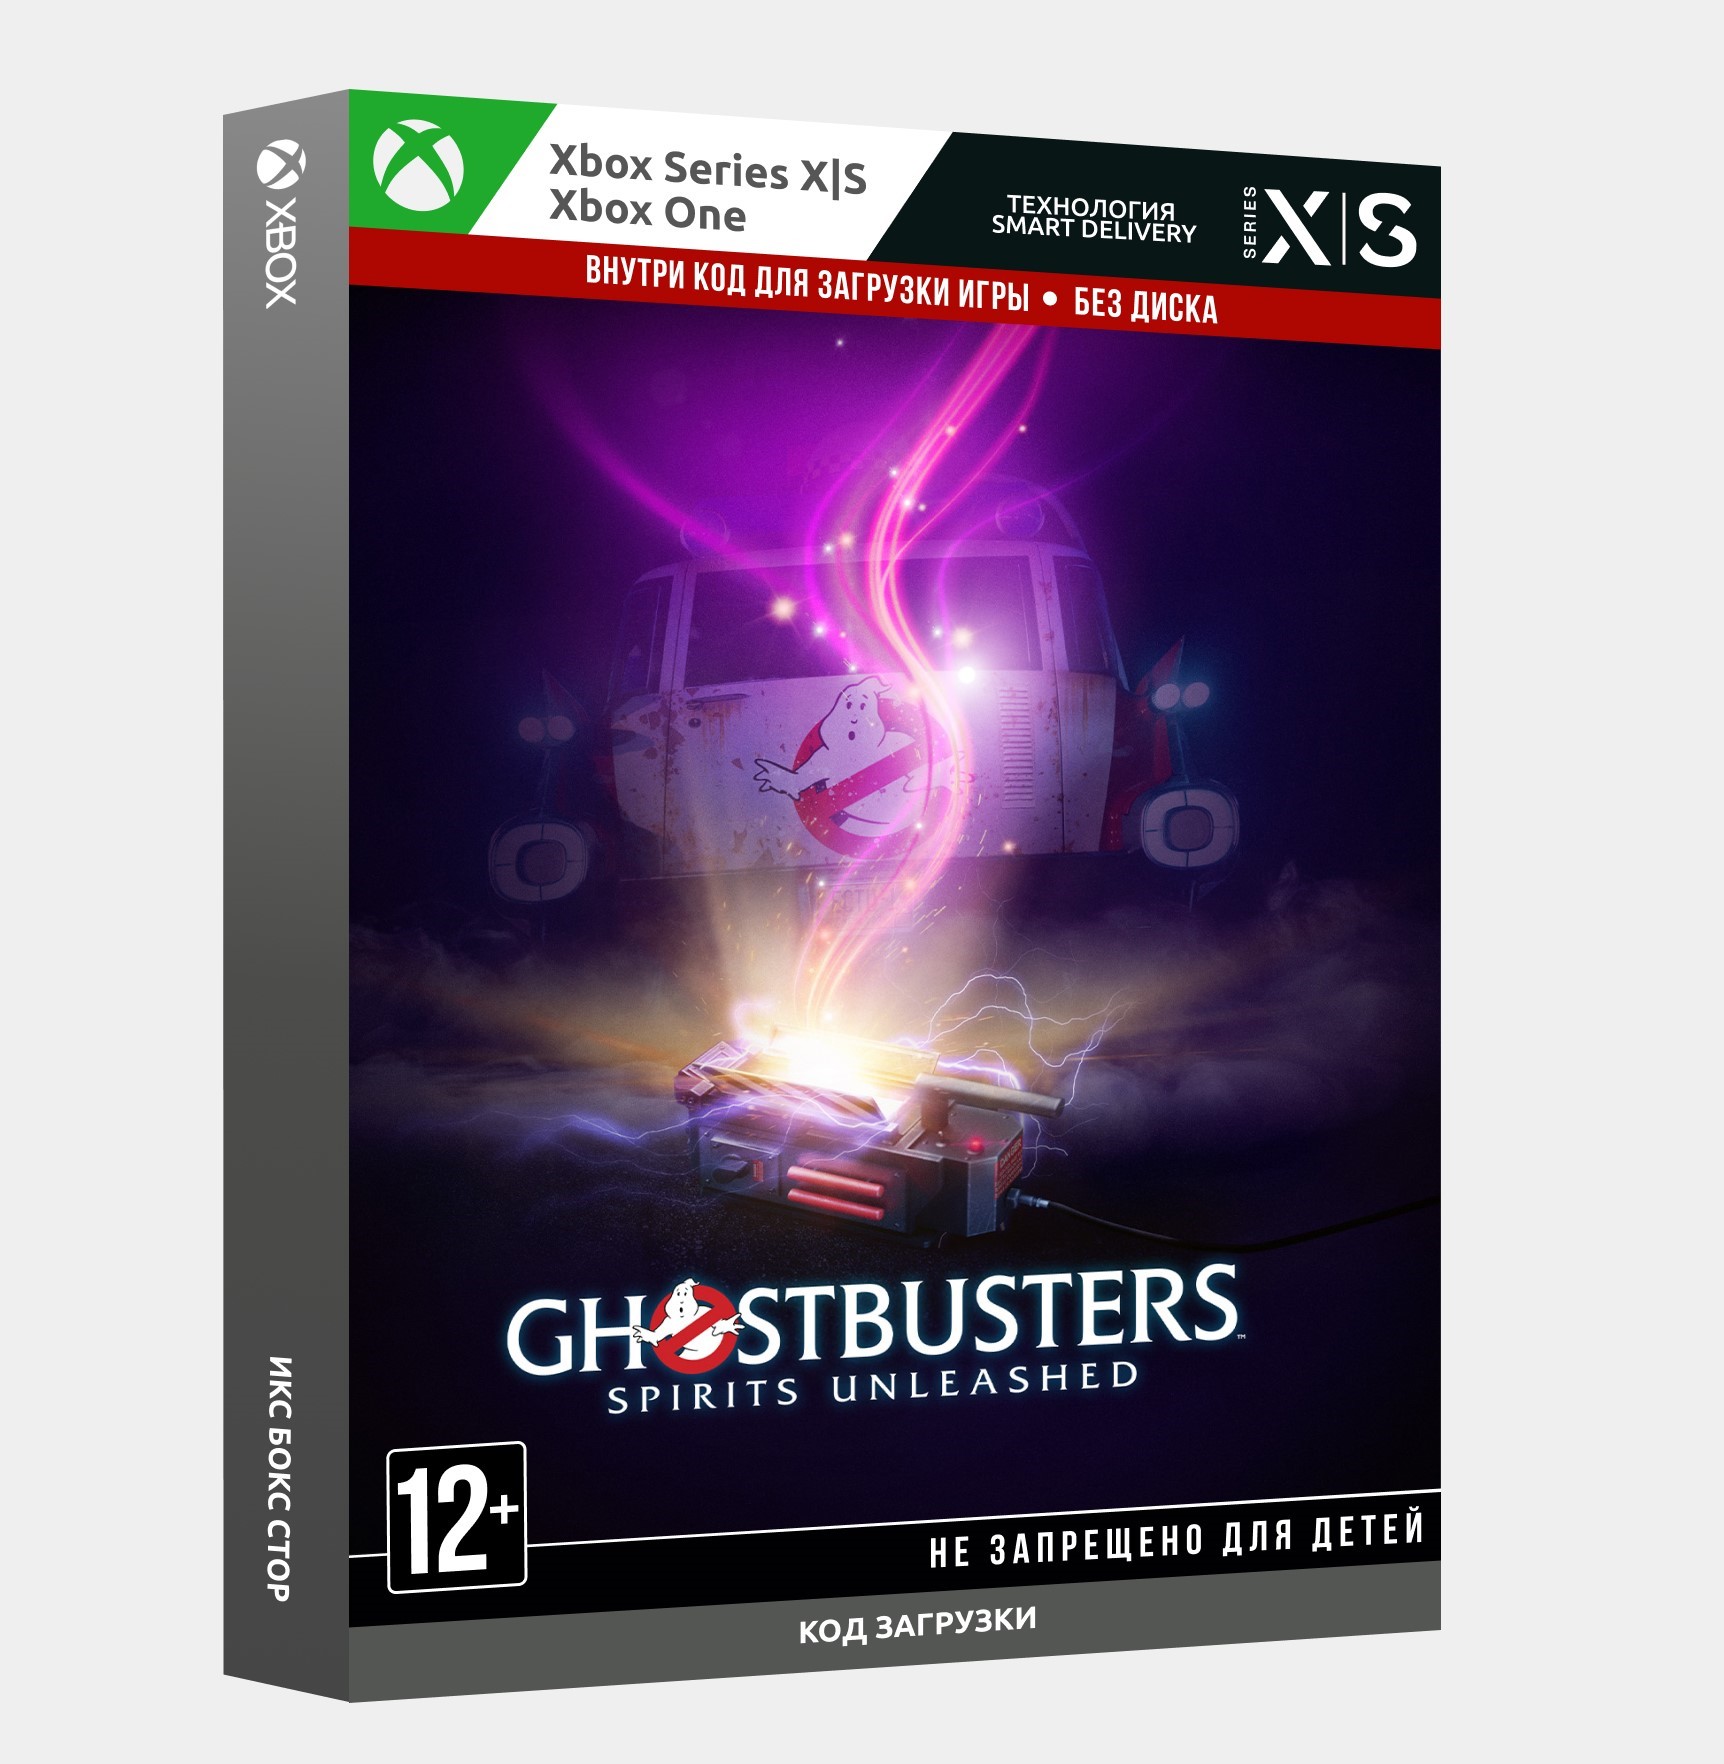 GHOSTBUSTERS: Spirits unleashed Xbox. Outlast trials купить xbox